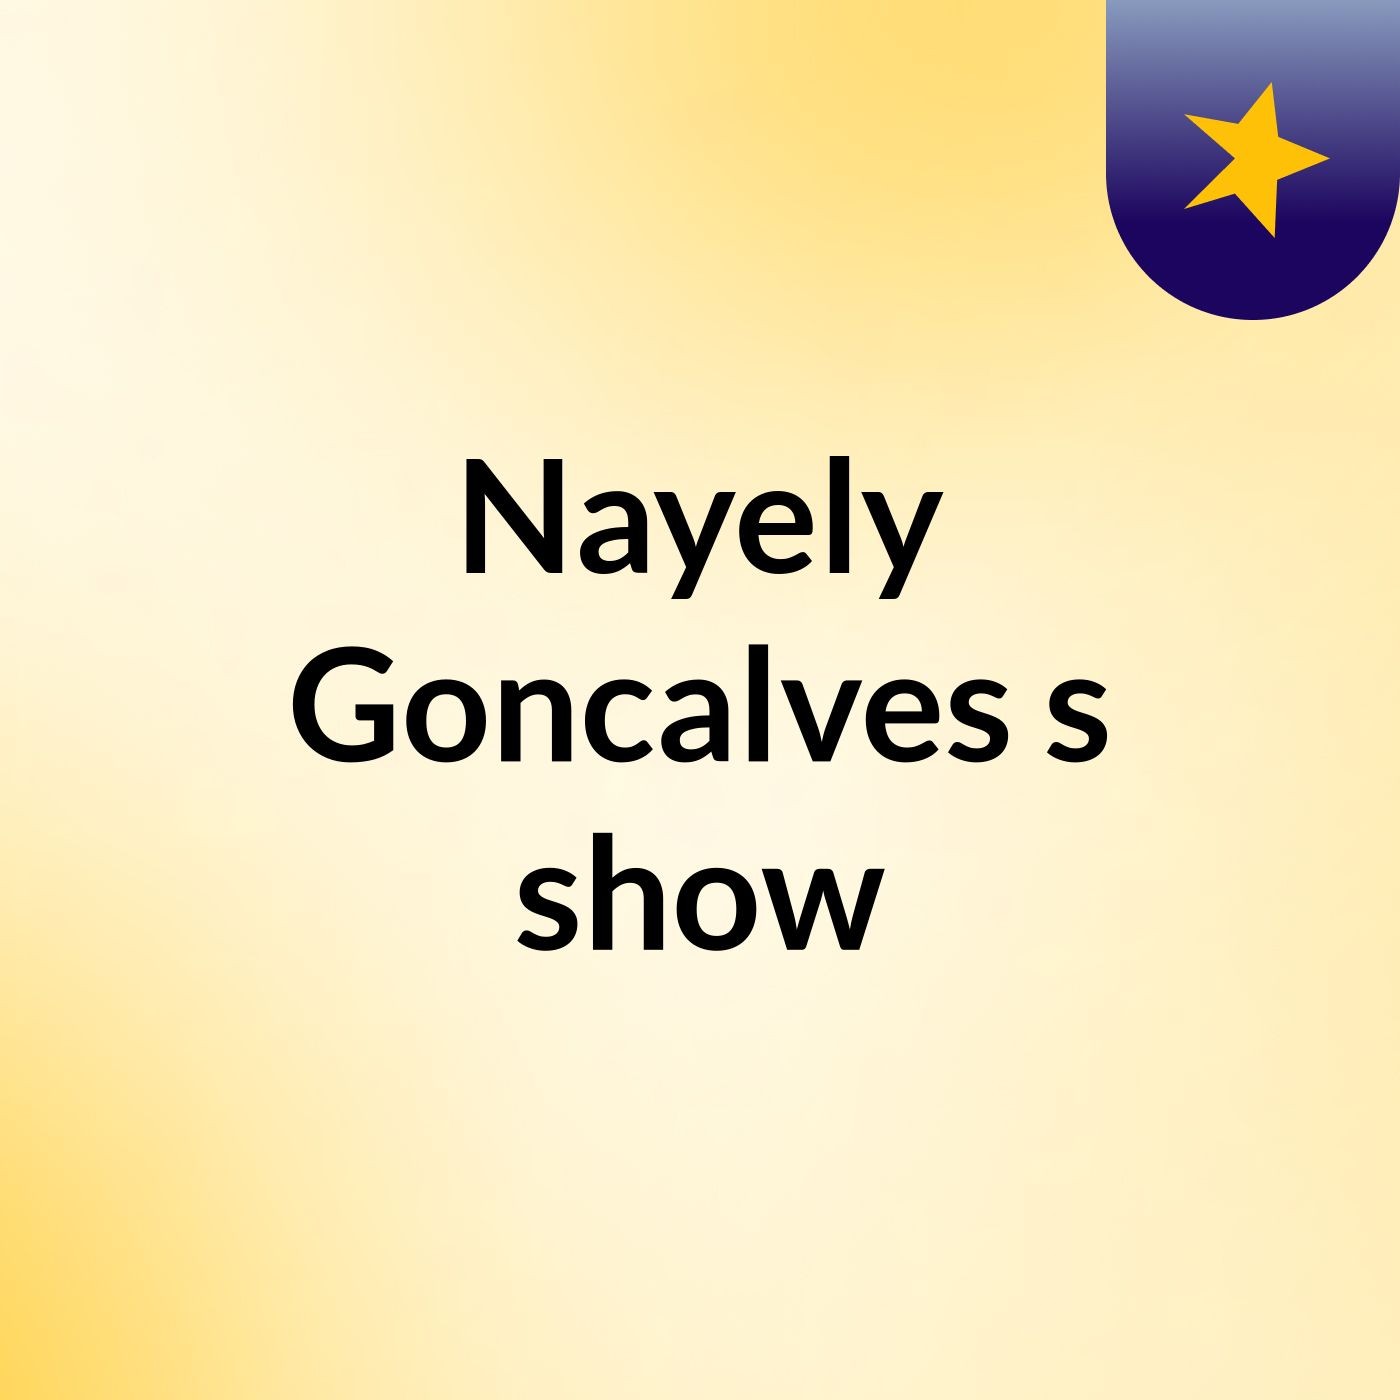 Nayely Goncalves's show